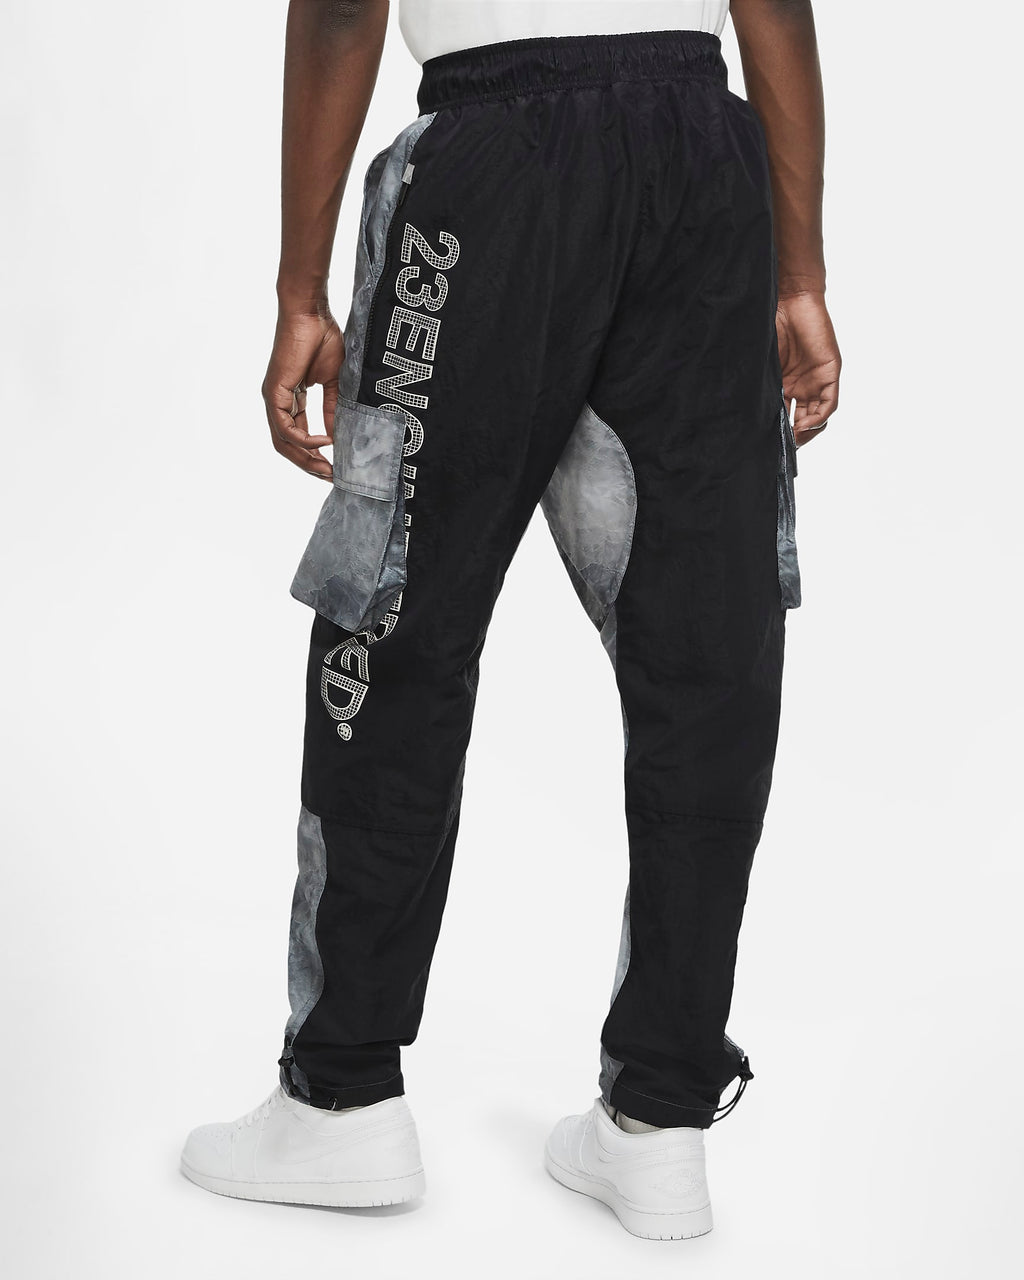 Men's Printed Cargo Trousers Jordan 23 Engineered 'White/Black'